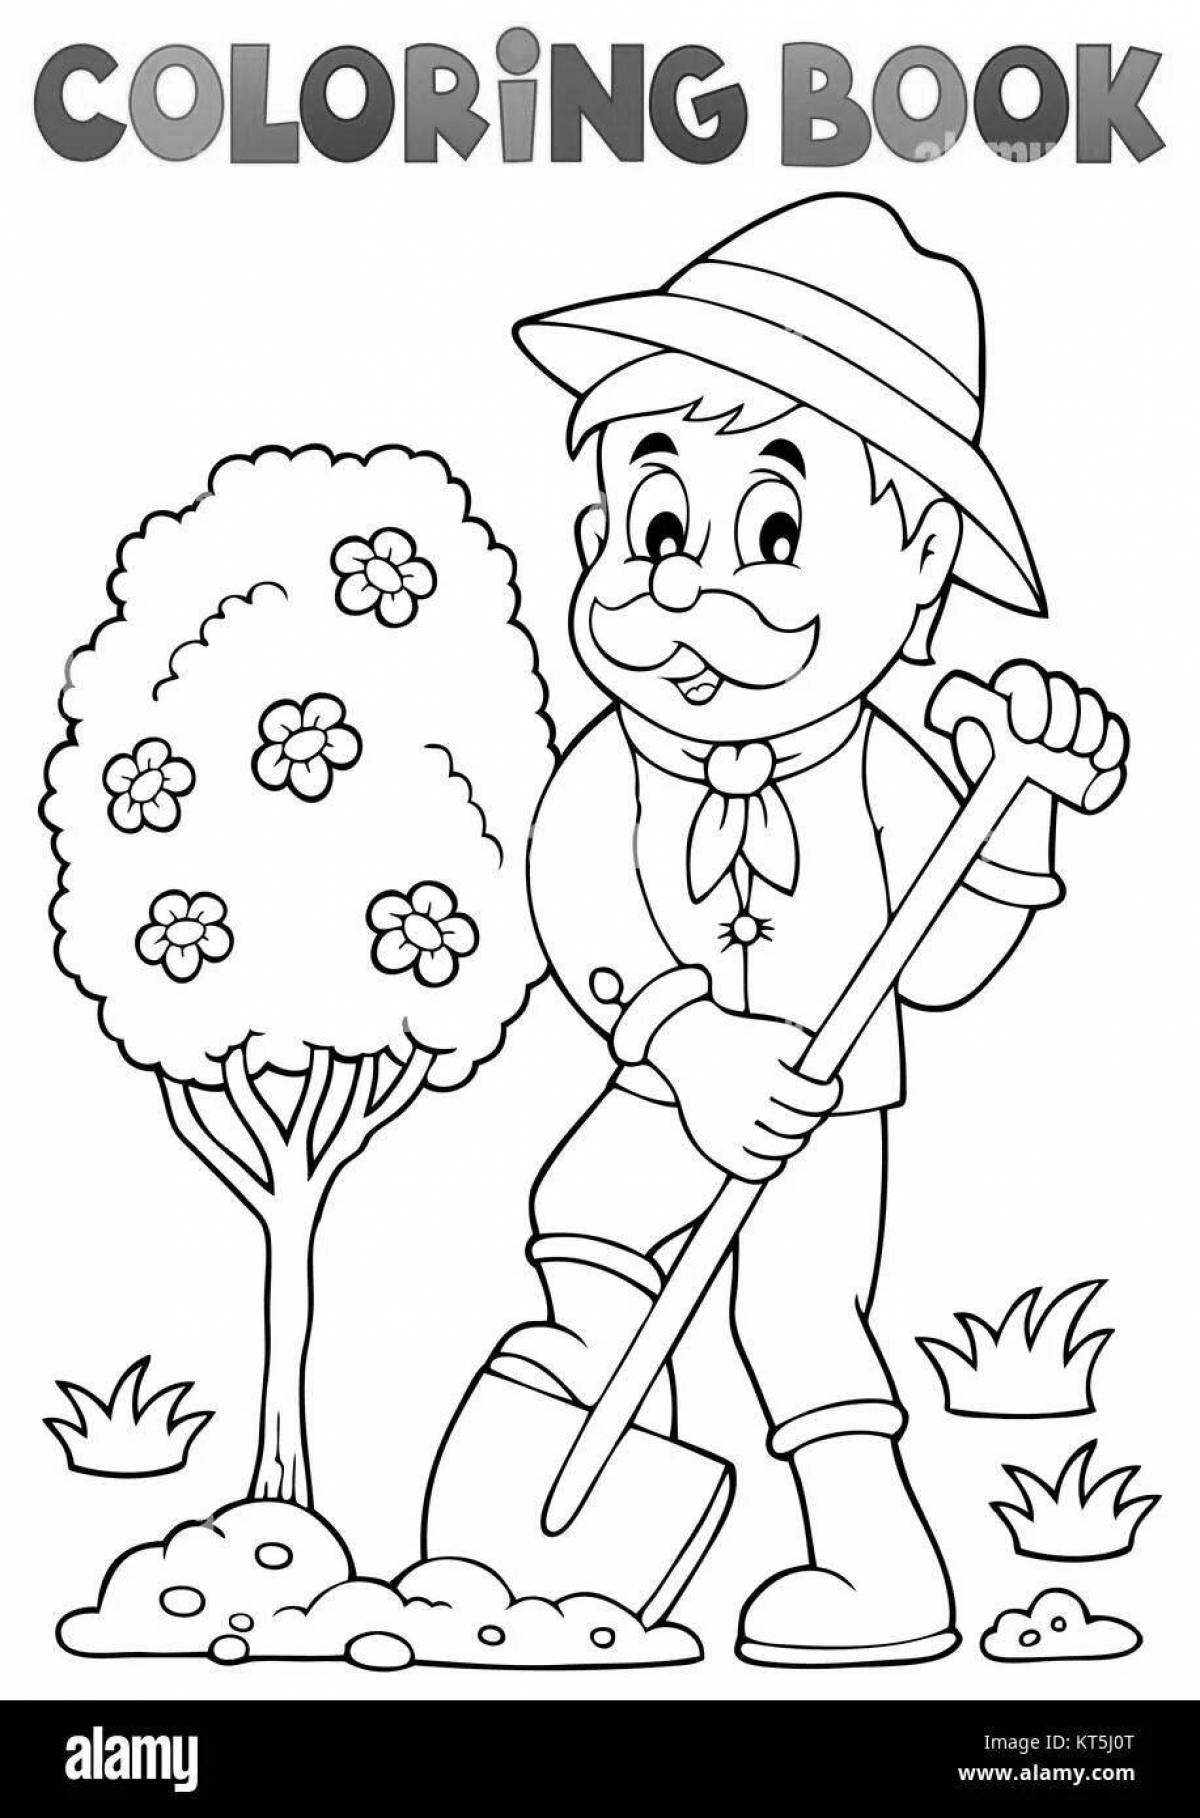 Adorable gardener coloring book for kids